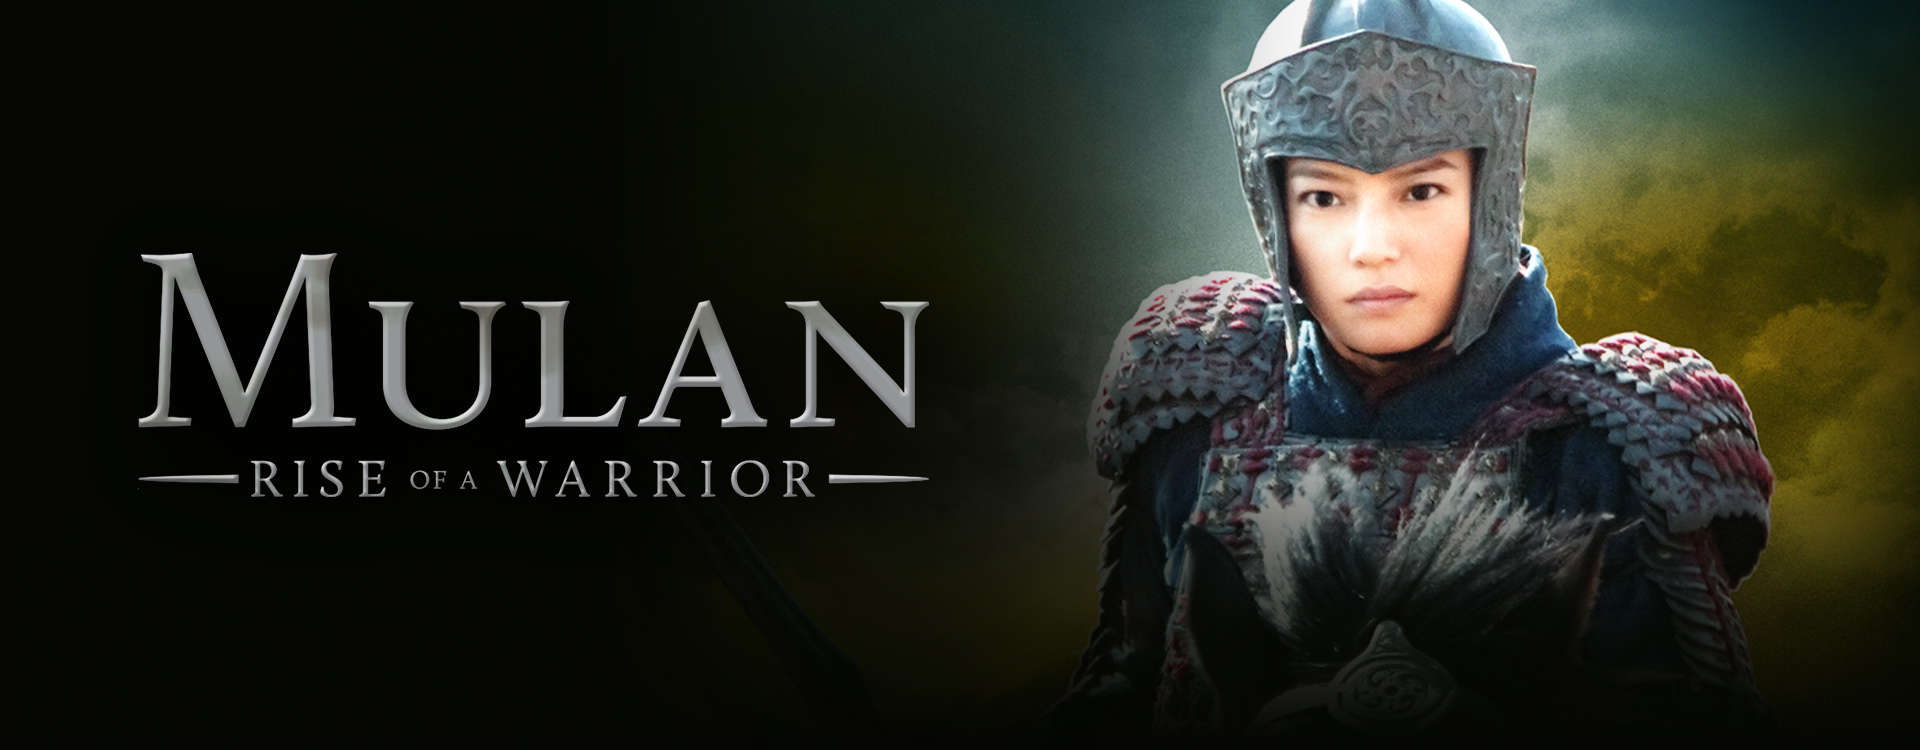 watch mulan rise of a warrior online free english version